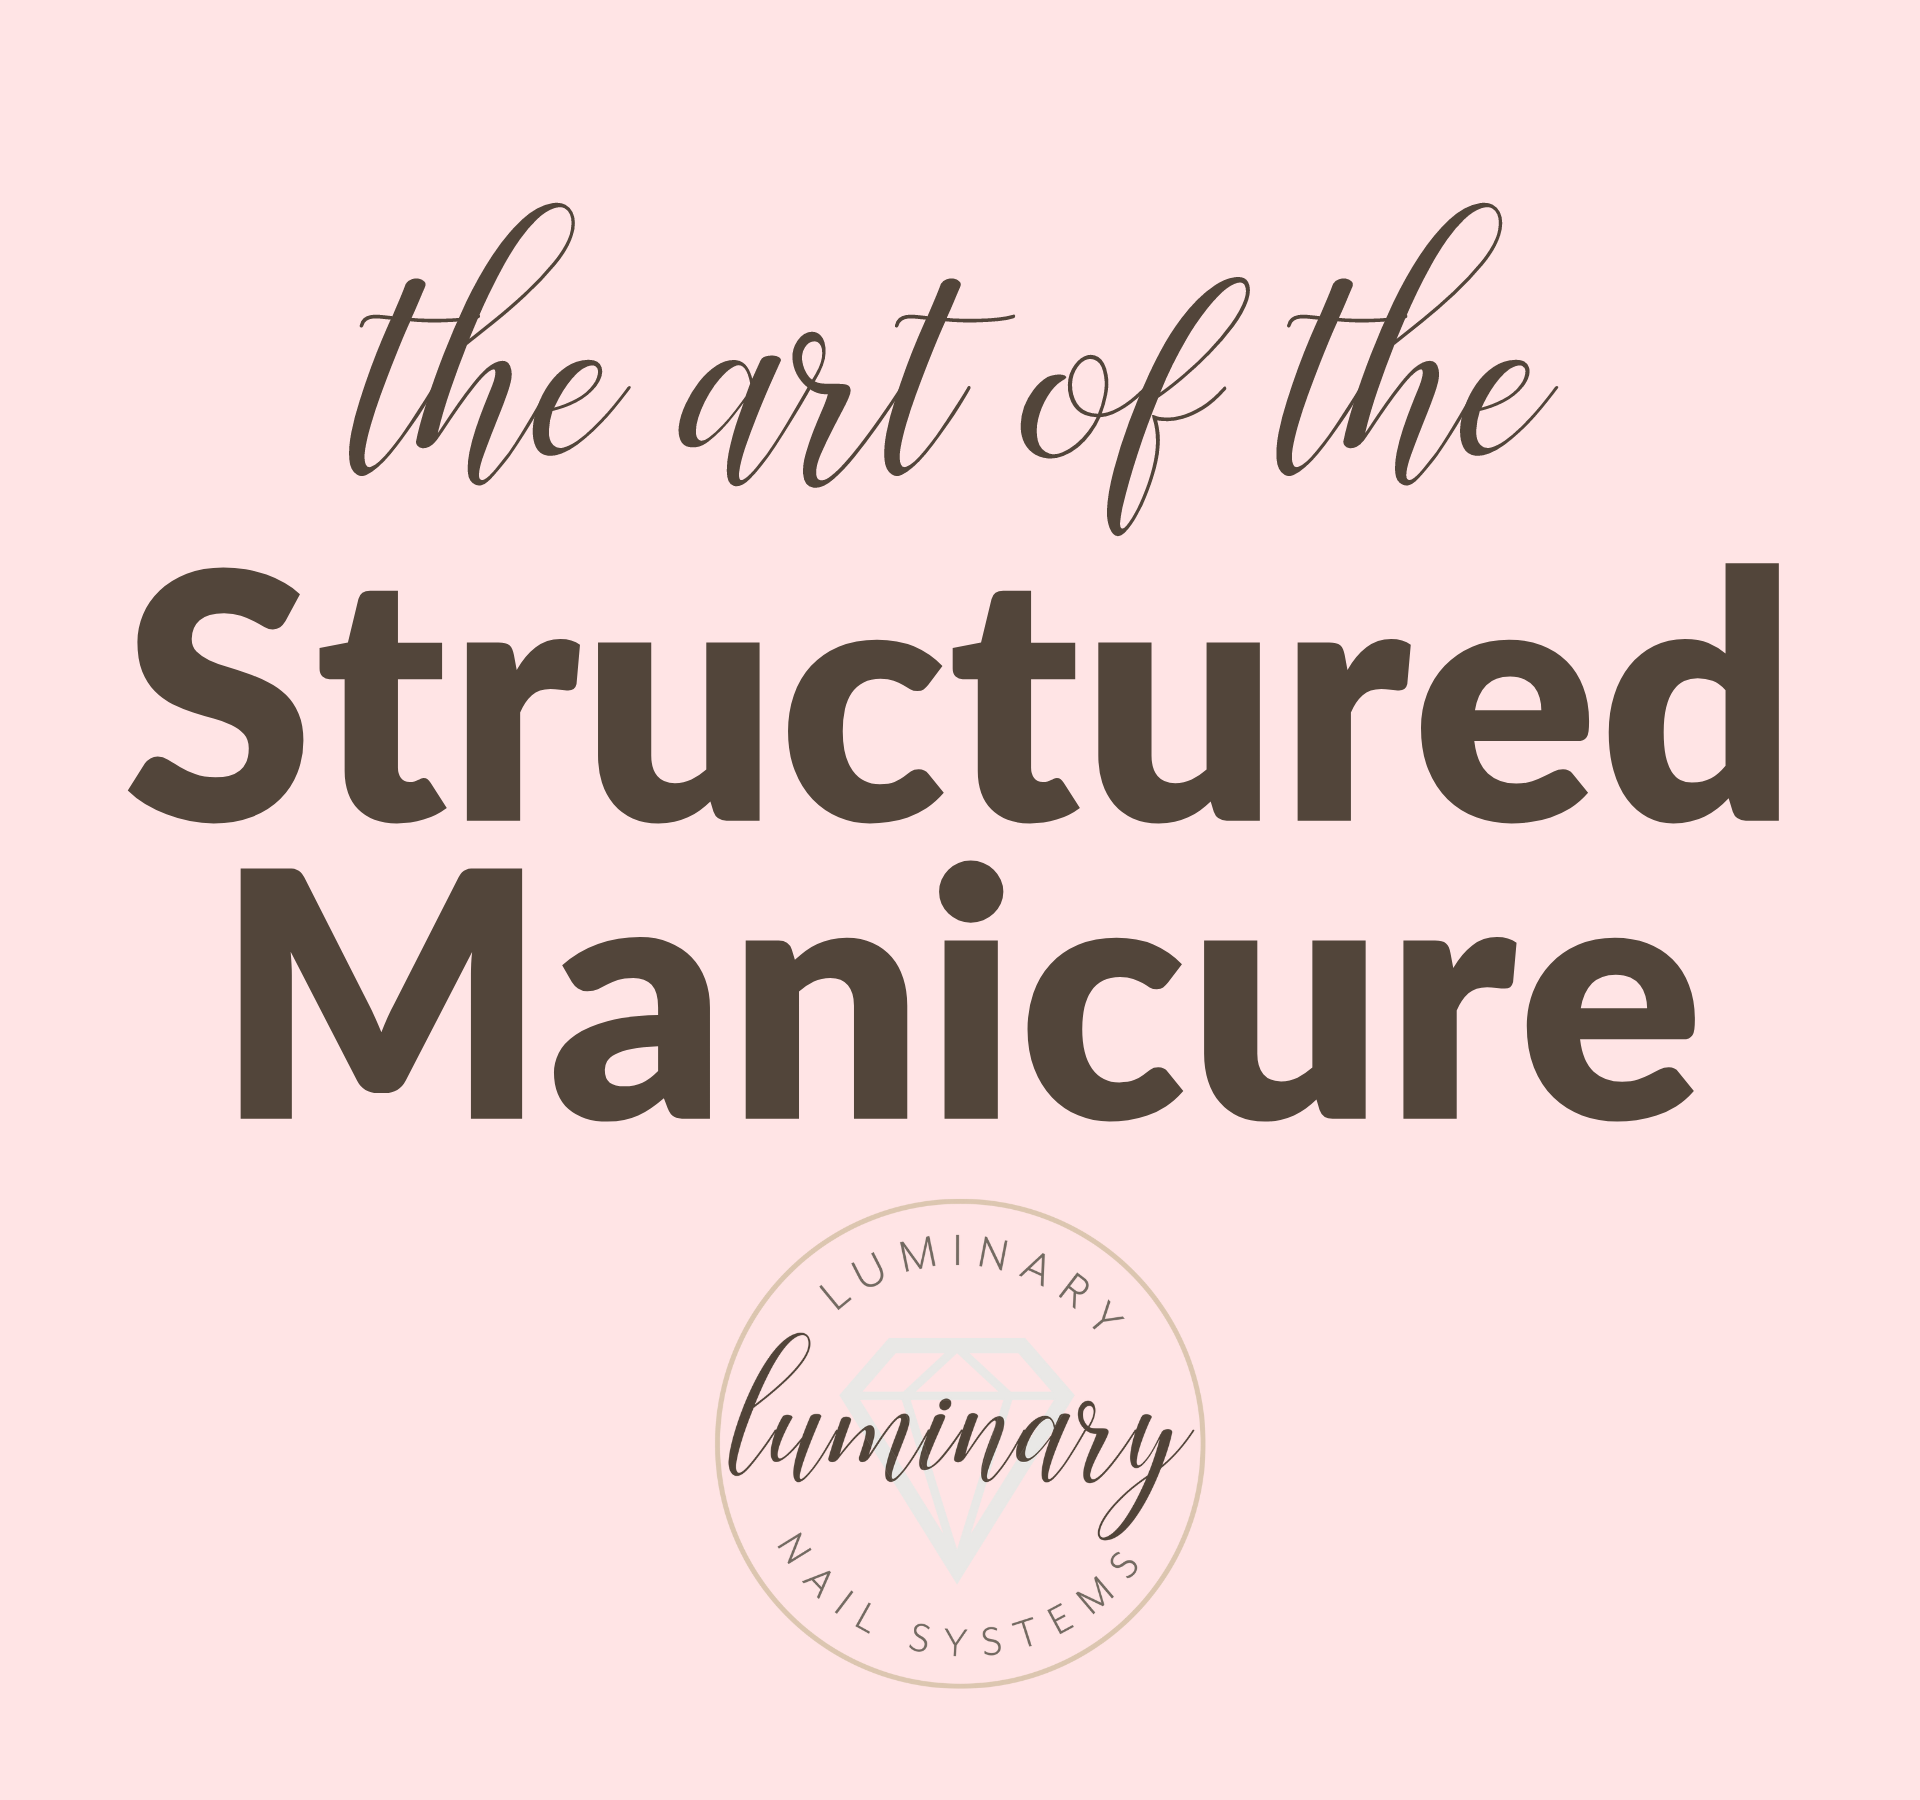 10/08/23 HANDS-ON "Structured Manicure" Certification Class - NASHVILLE, TN